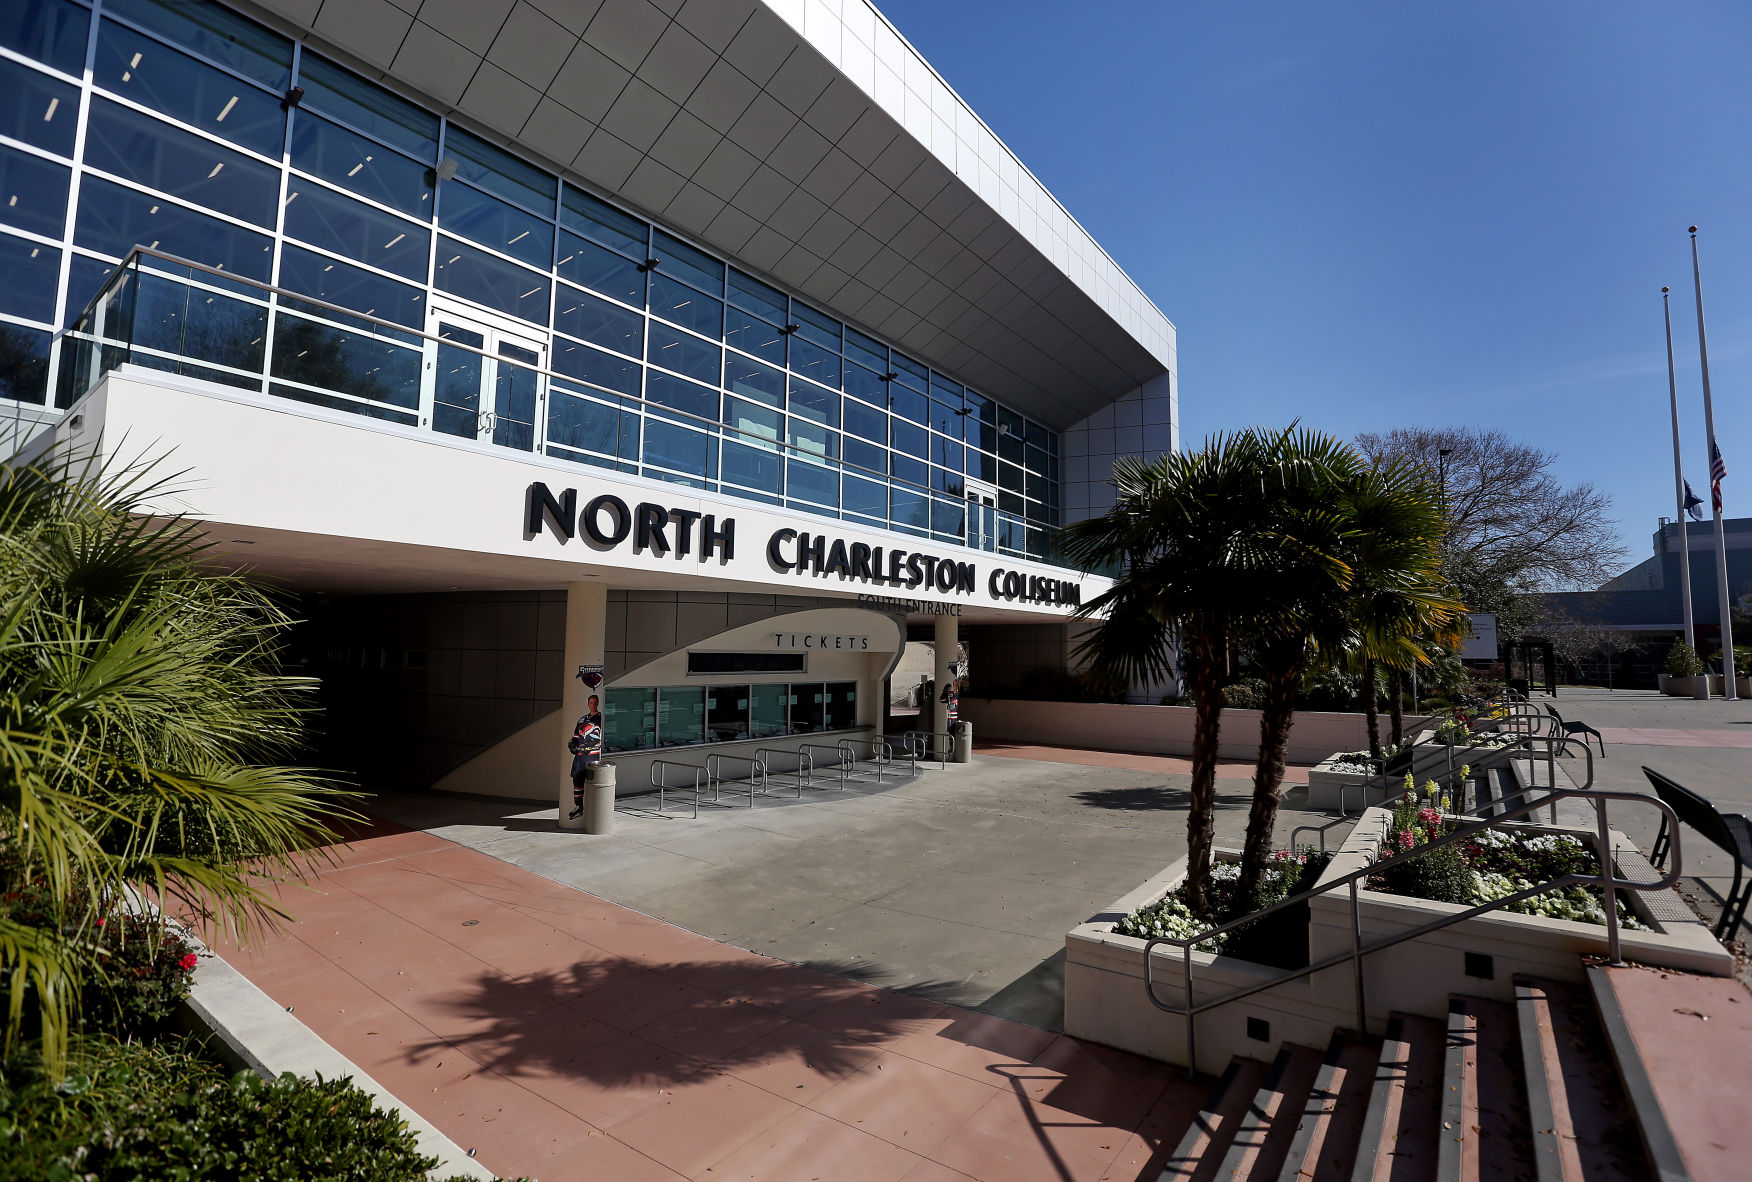 North Charleston Convention Center Seating Chart